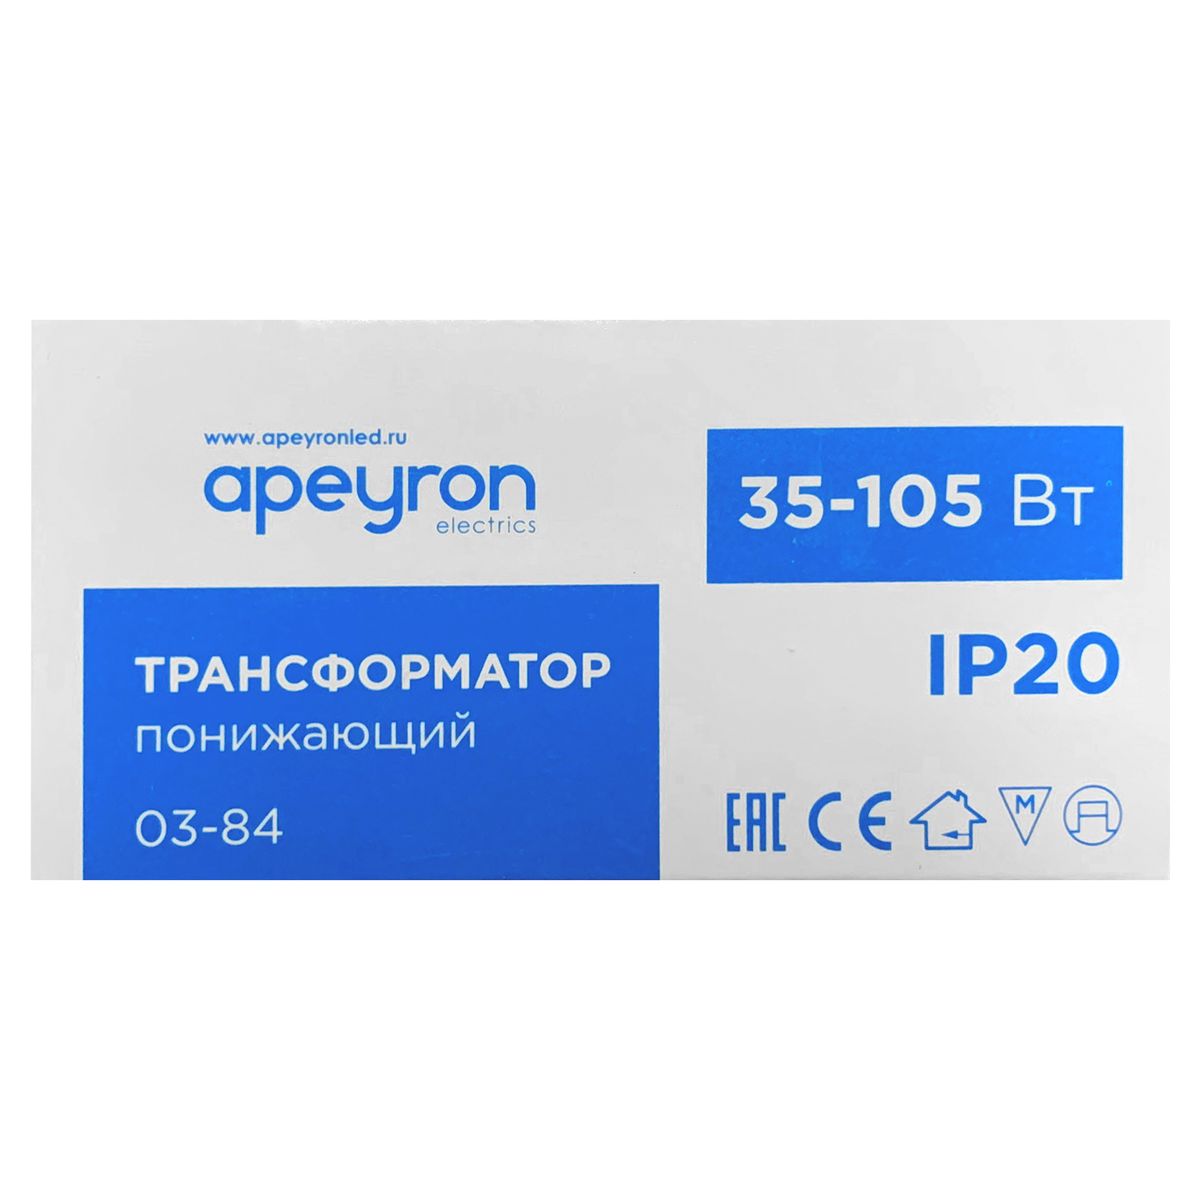 Трансформатор понижающий Apeyron 12В 35-105Вт 03-84